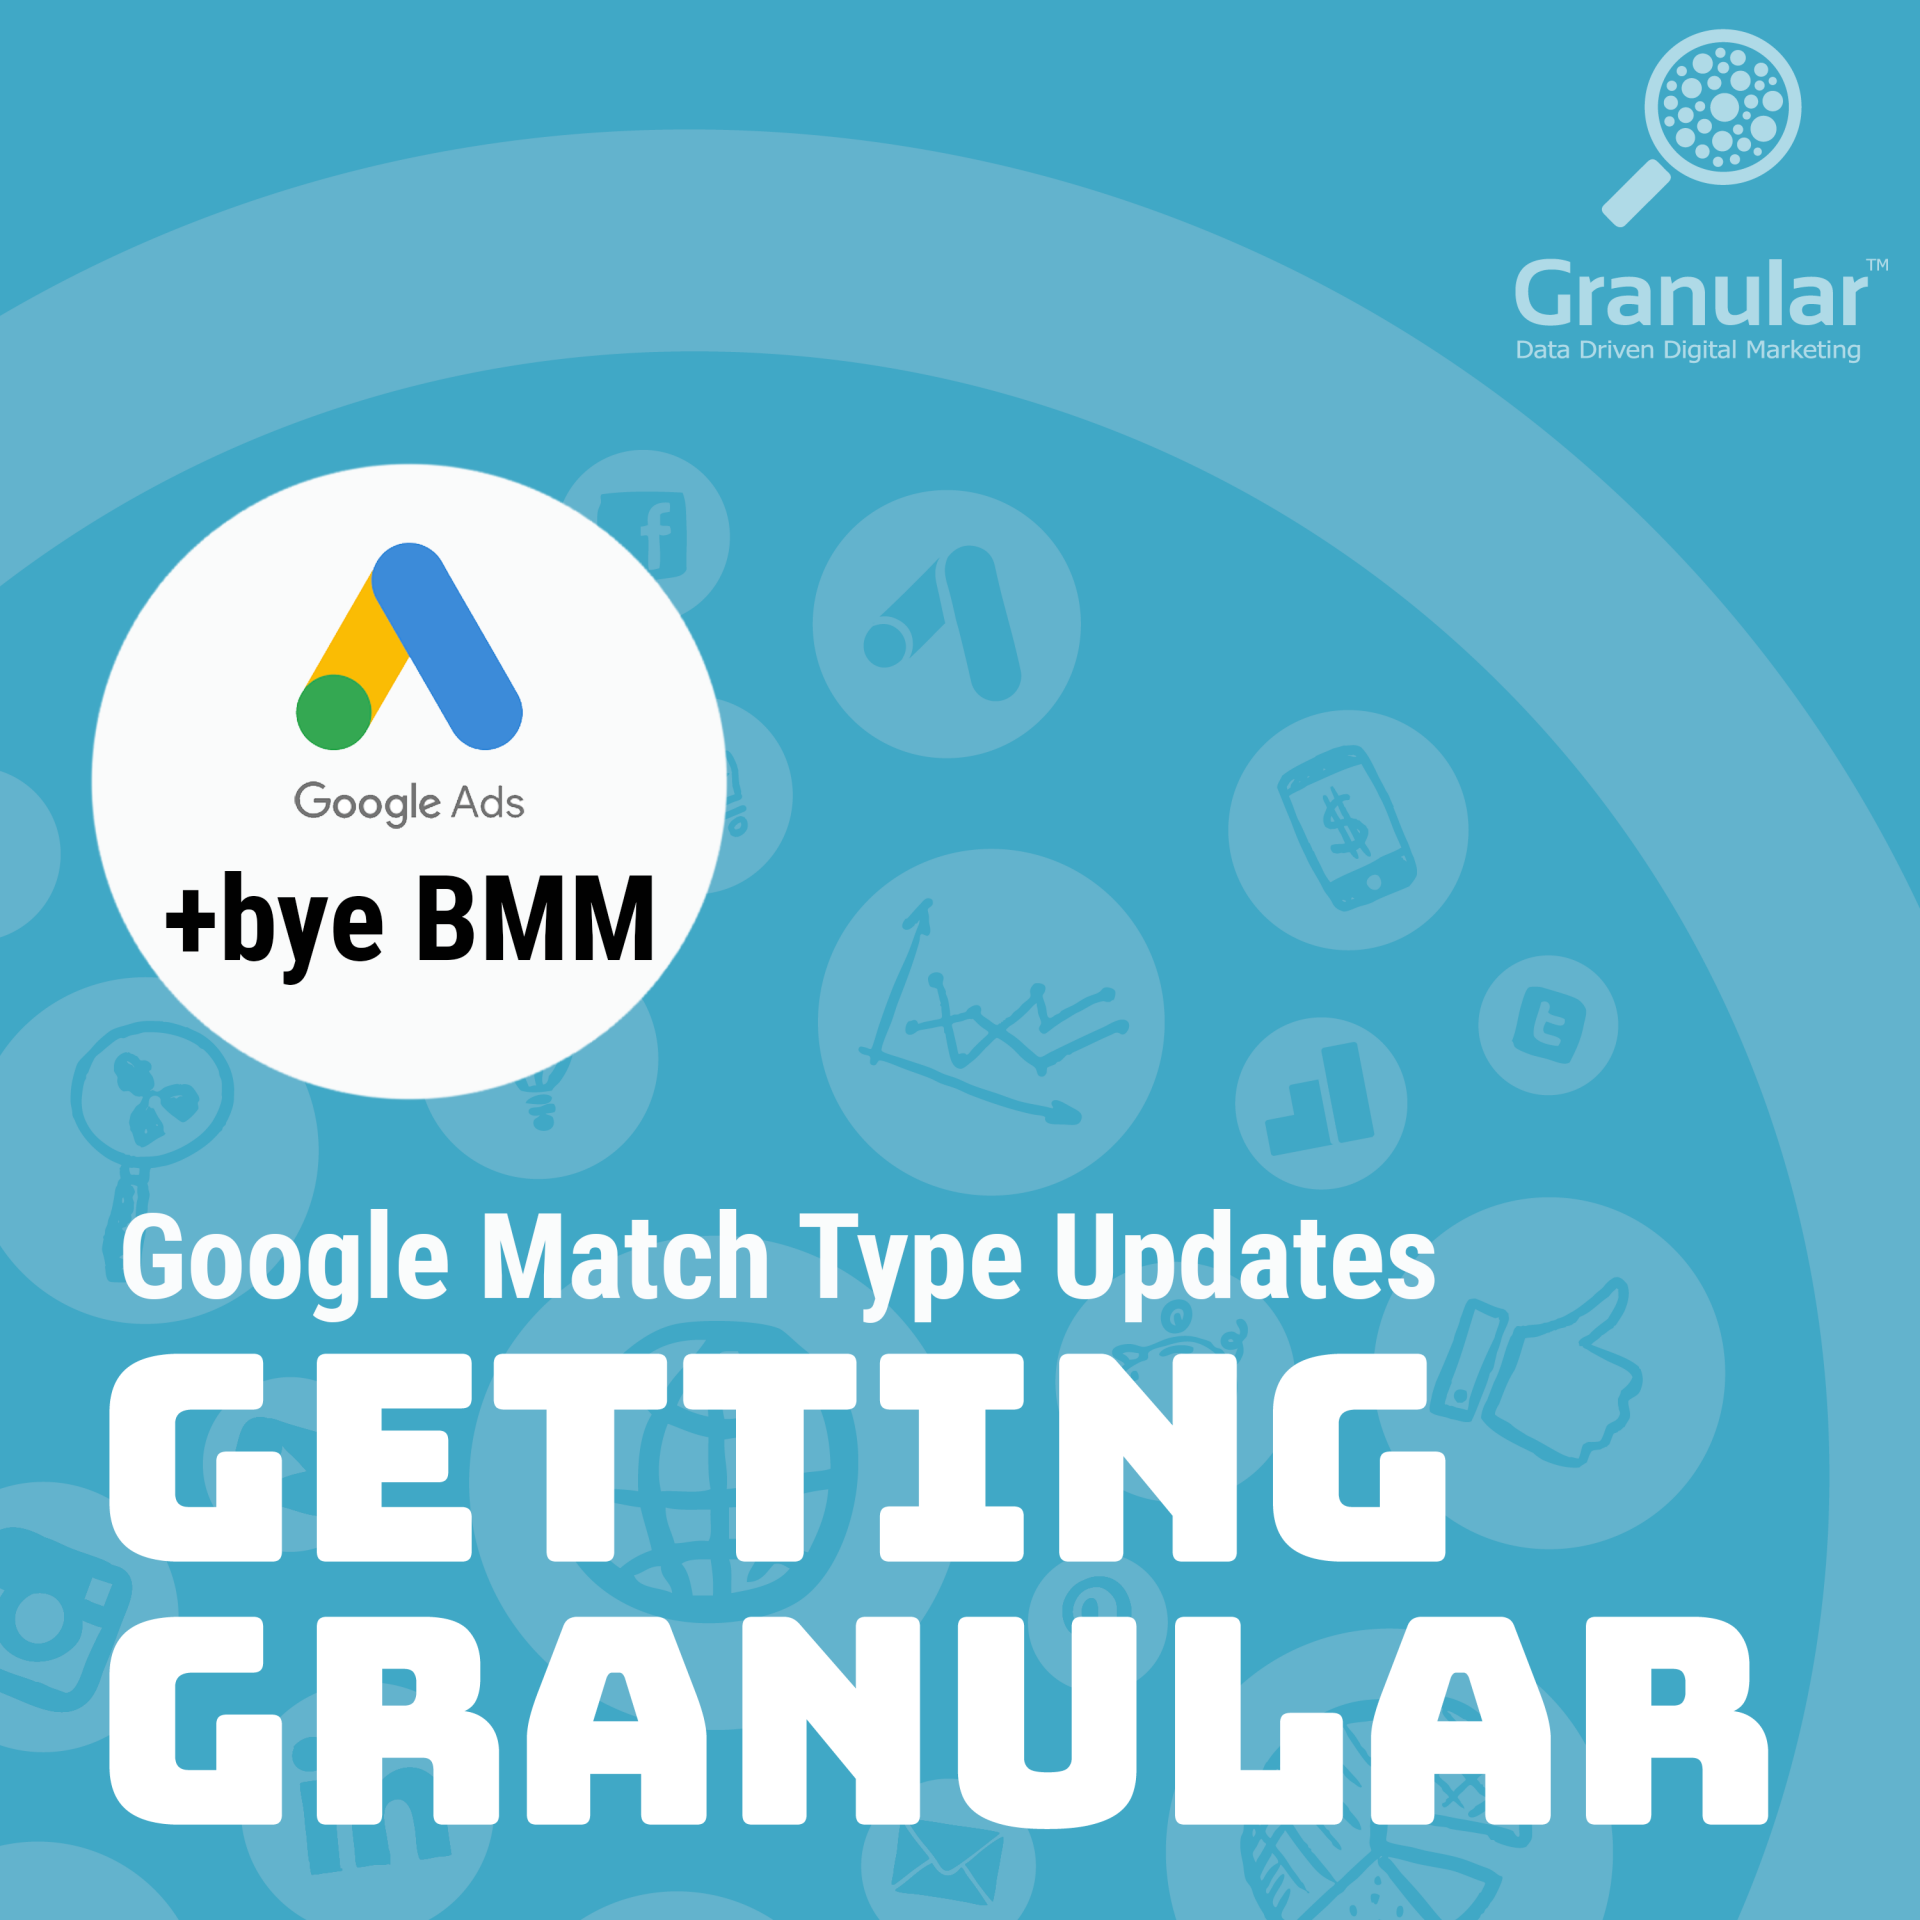 Granular Podcast: Getting Granular - Google Match Type Updates